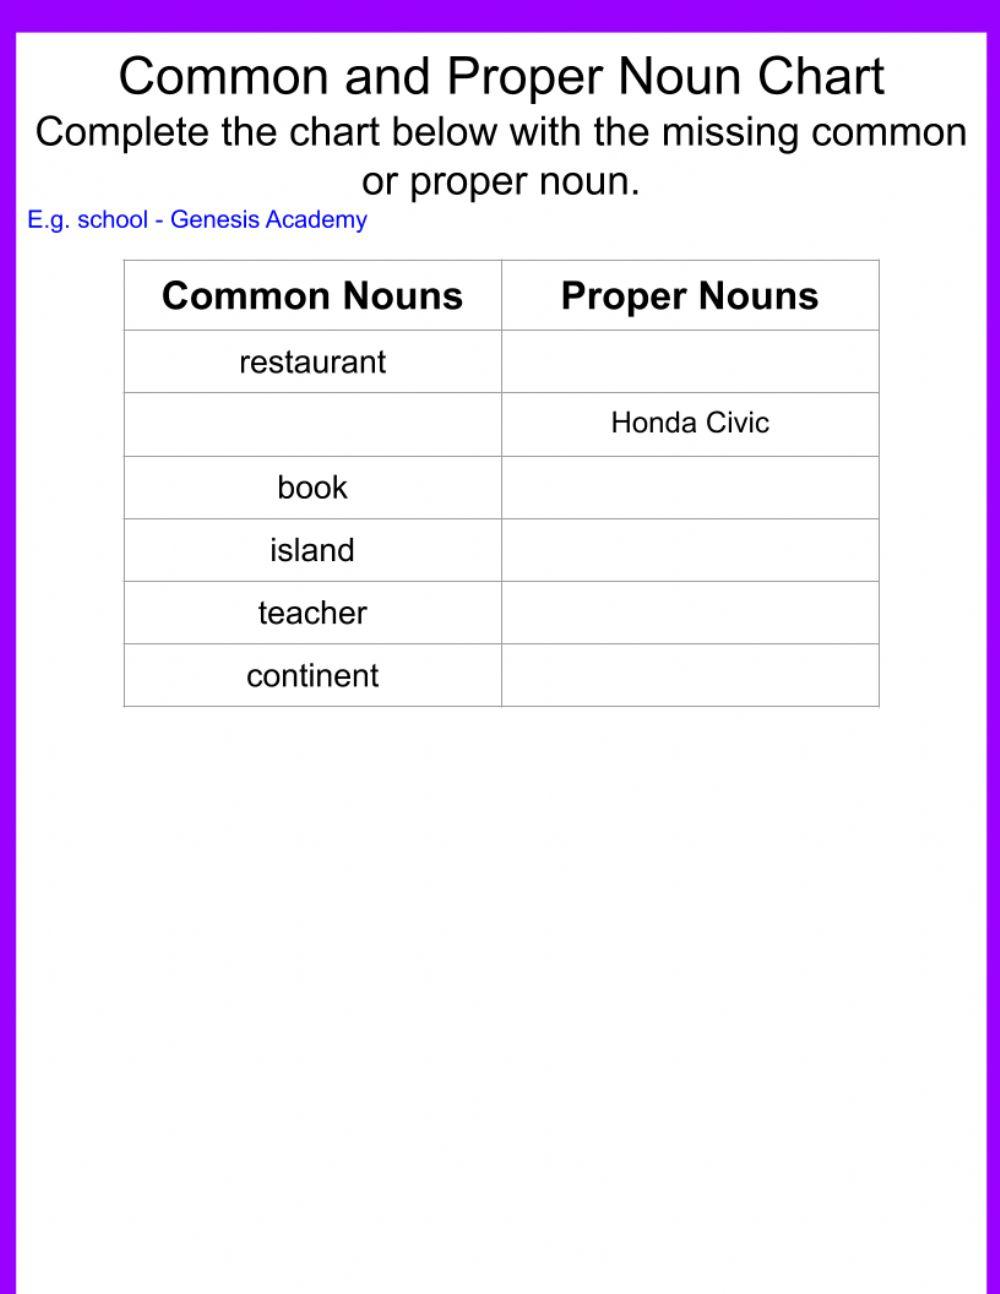 Common and Proper Nouns Chart